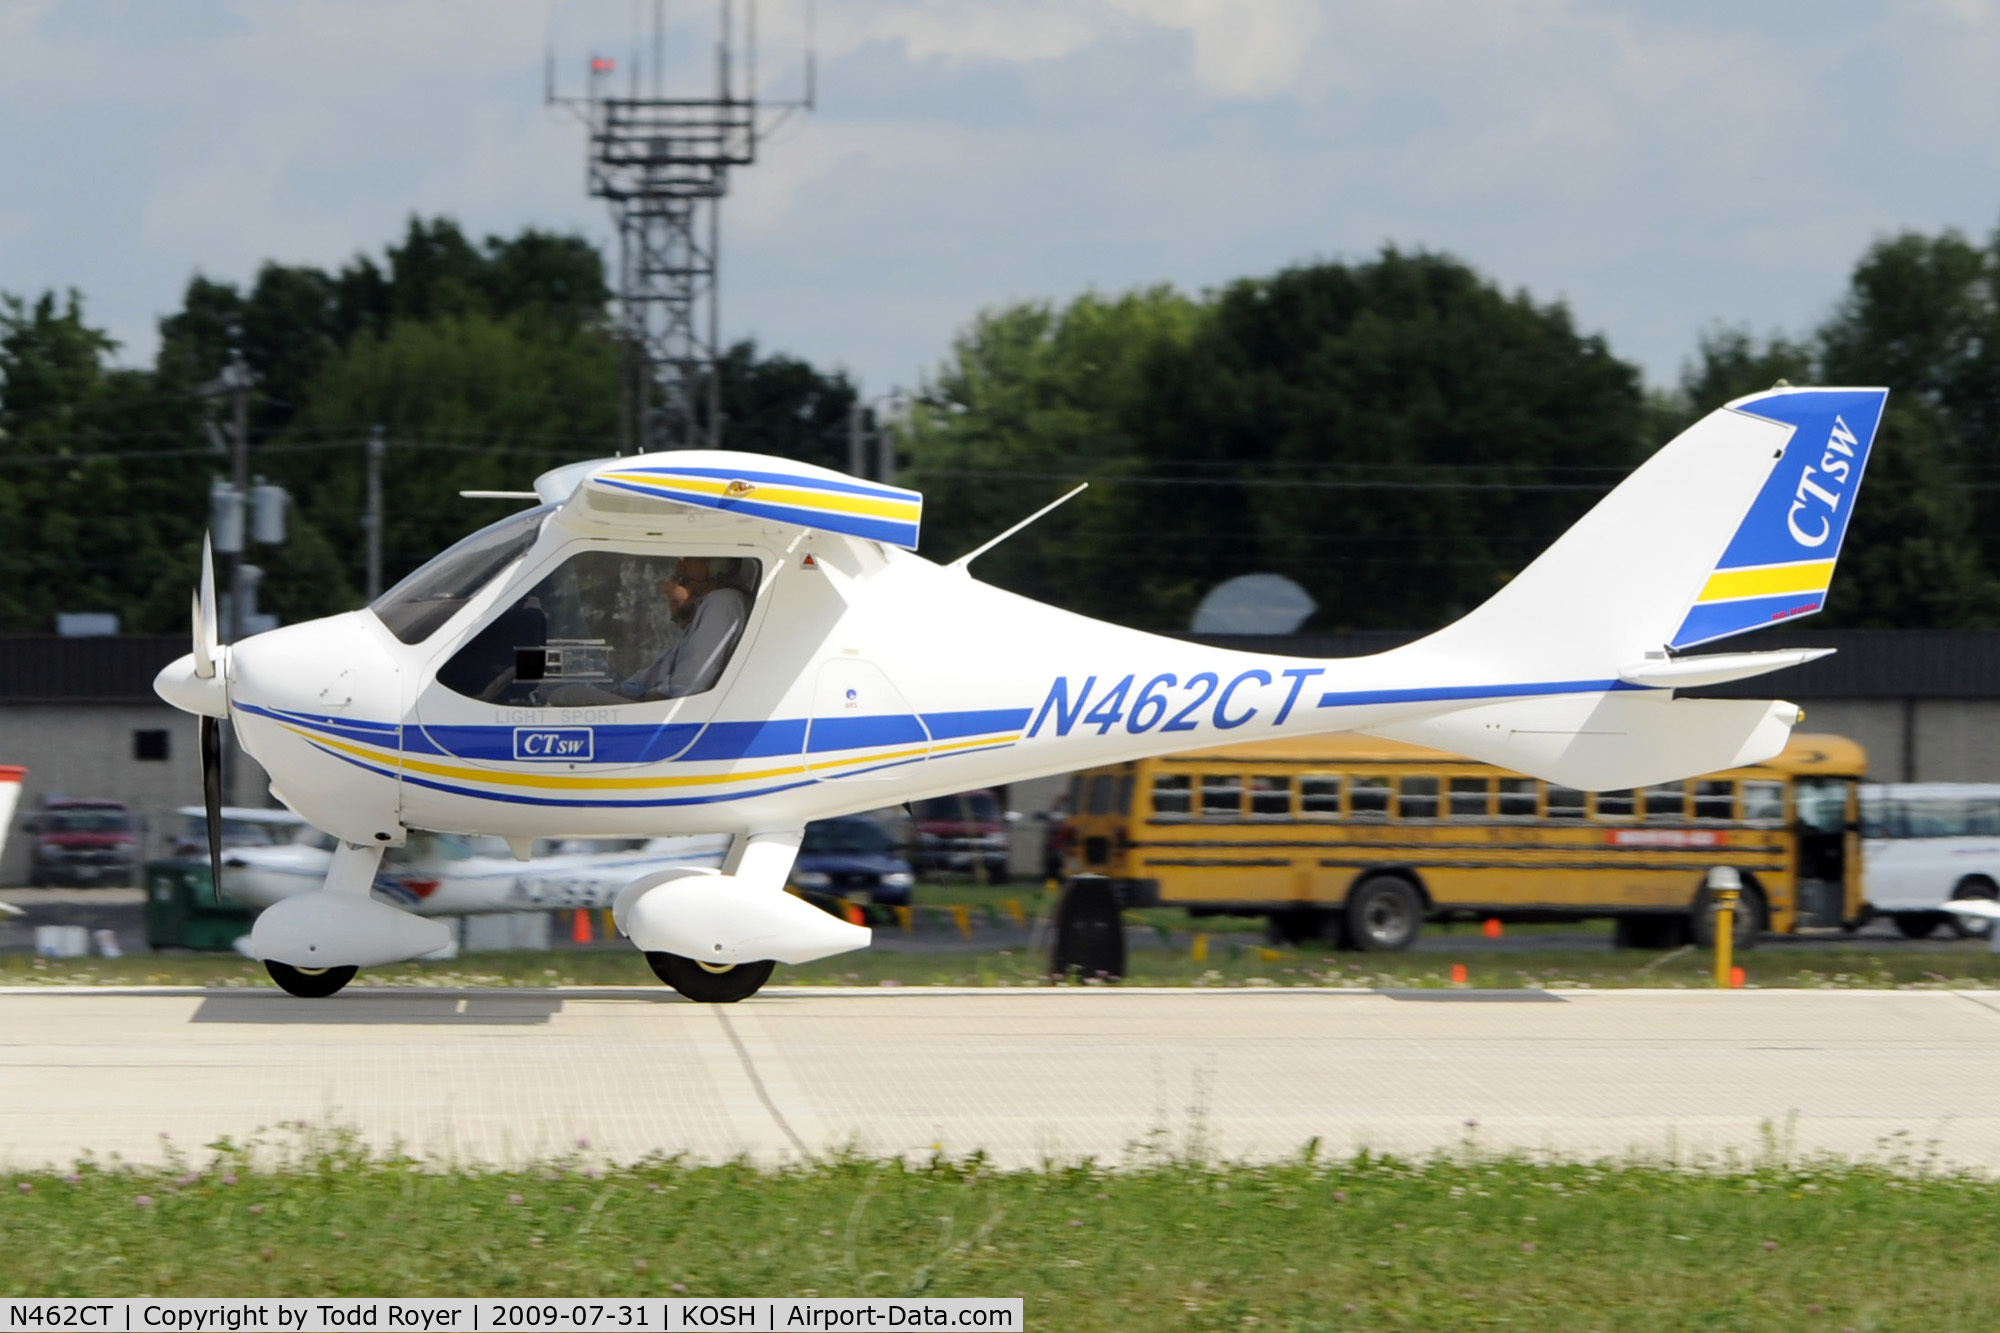 N462CT, 2006 Flight Design CTSW C/N 06-10-12, Oshkosh EAA Fly-in 2009